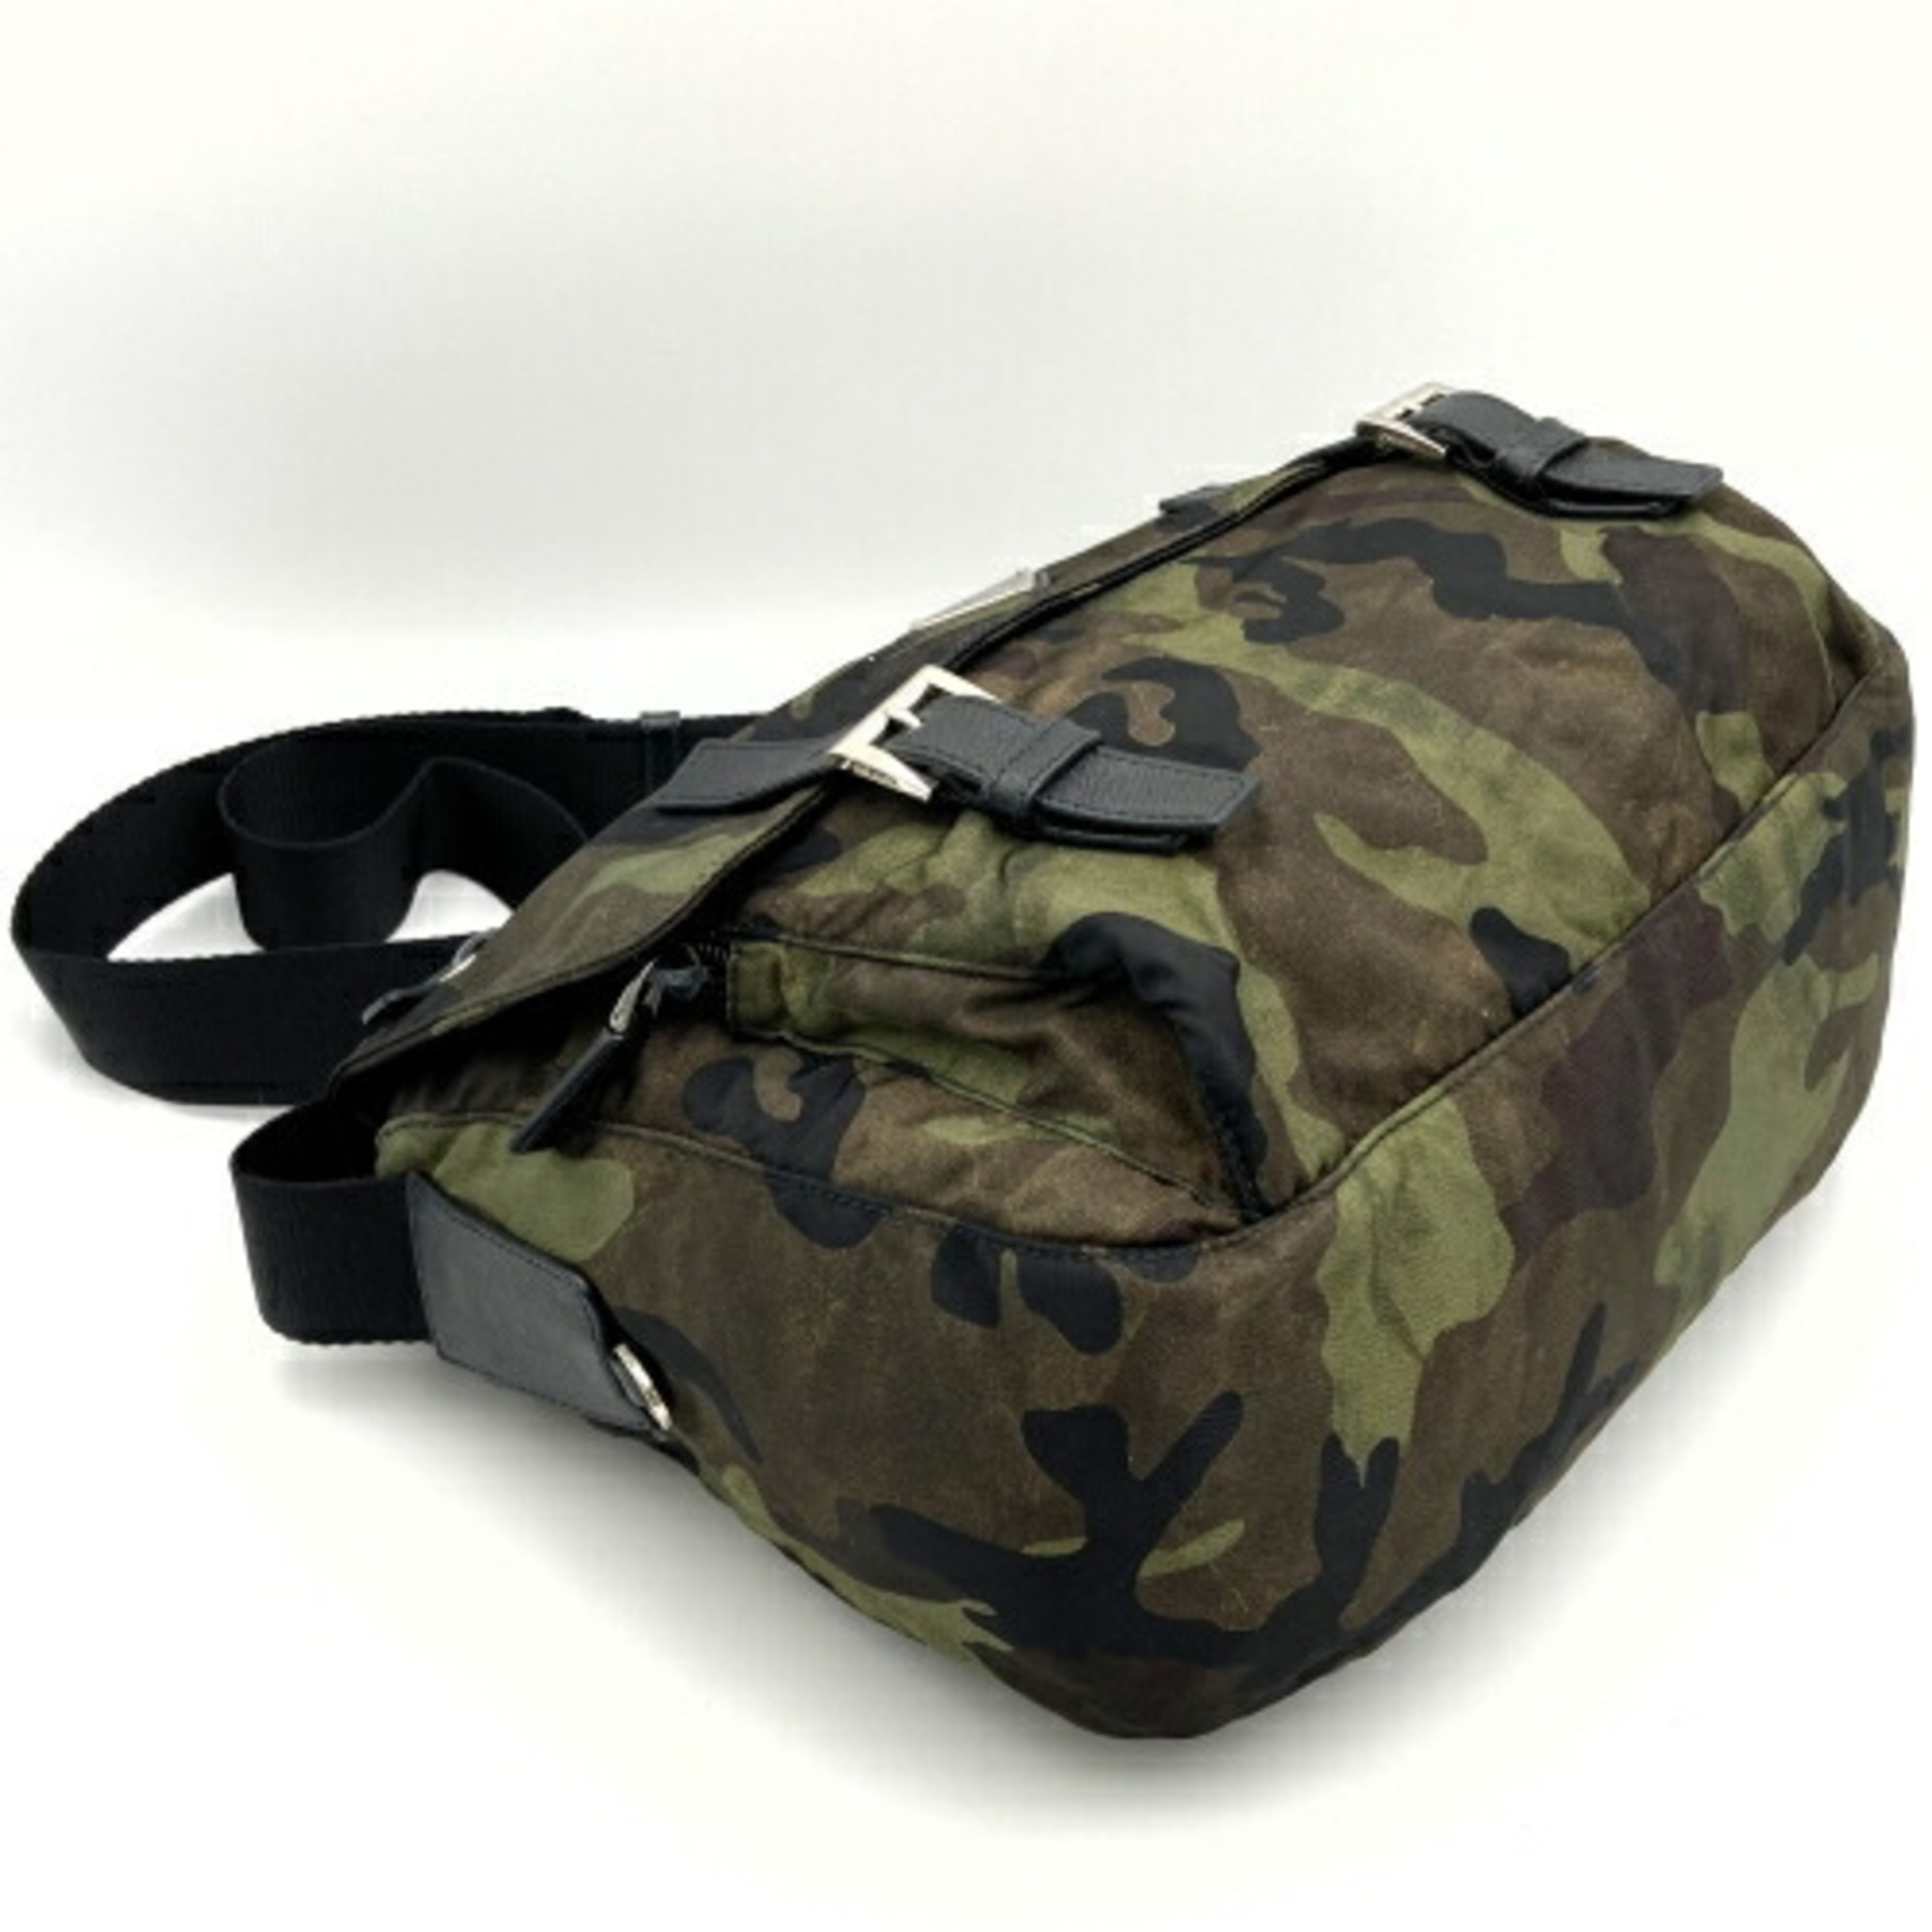 PRADA Prada shoulder bag camouflage pattern khaki green nylon men's women's ITNHPPP8I7VS